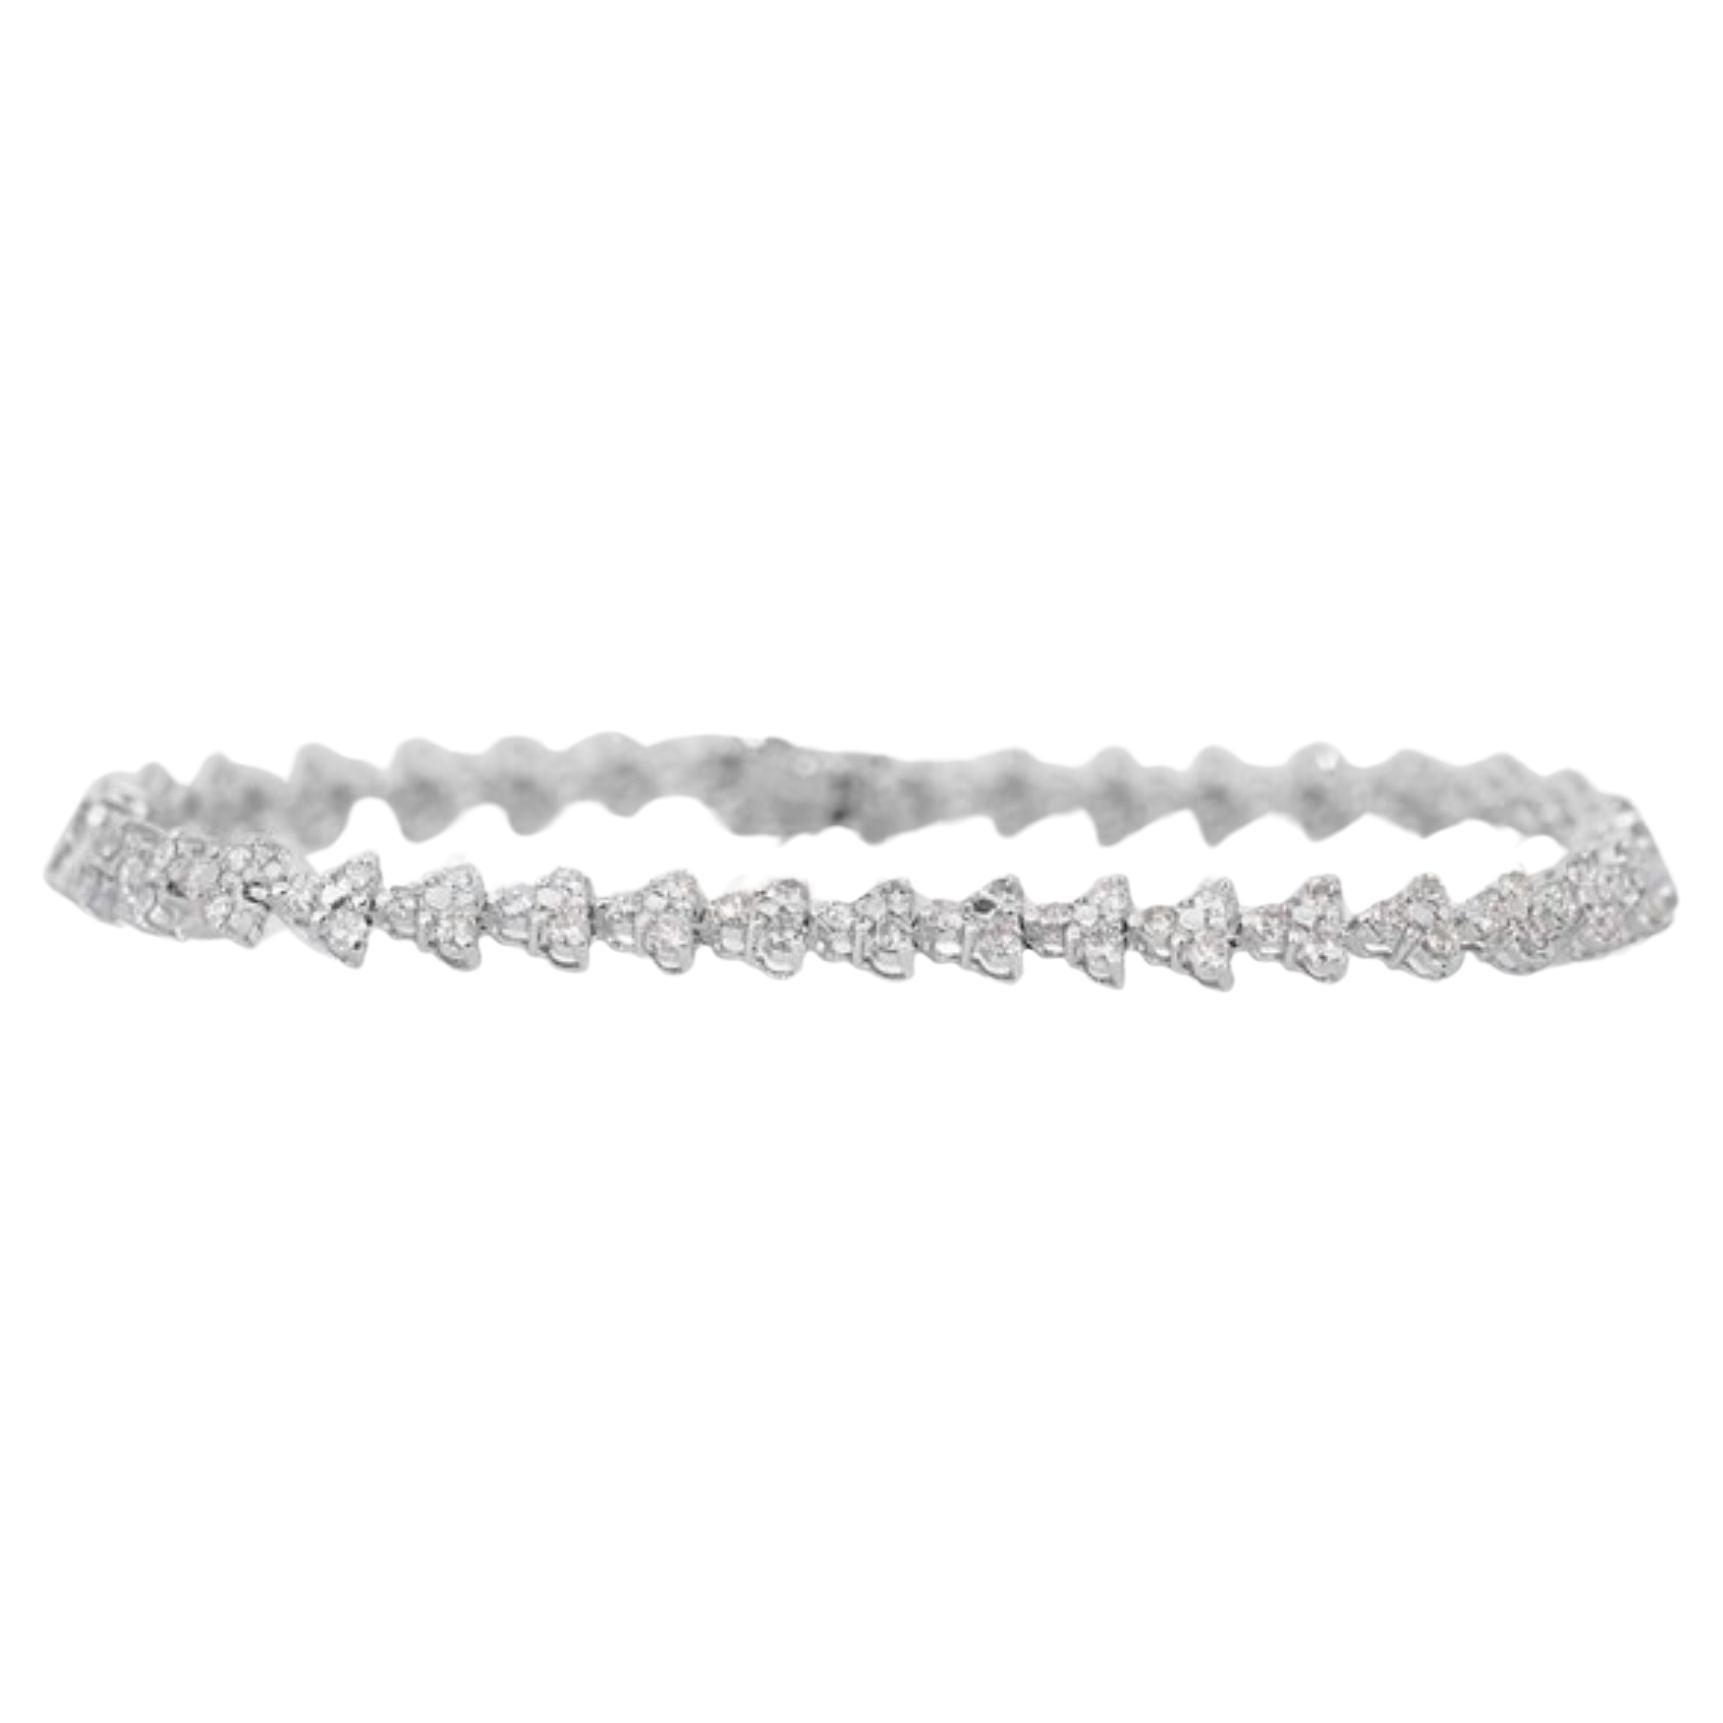 Exquisite 3.75ct Round Diamond Bracelet set in 14K White Gold For Sale